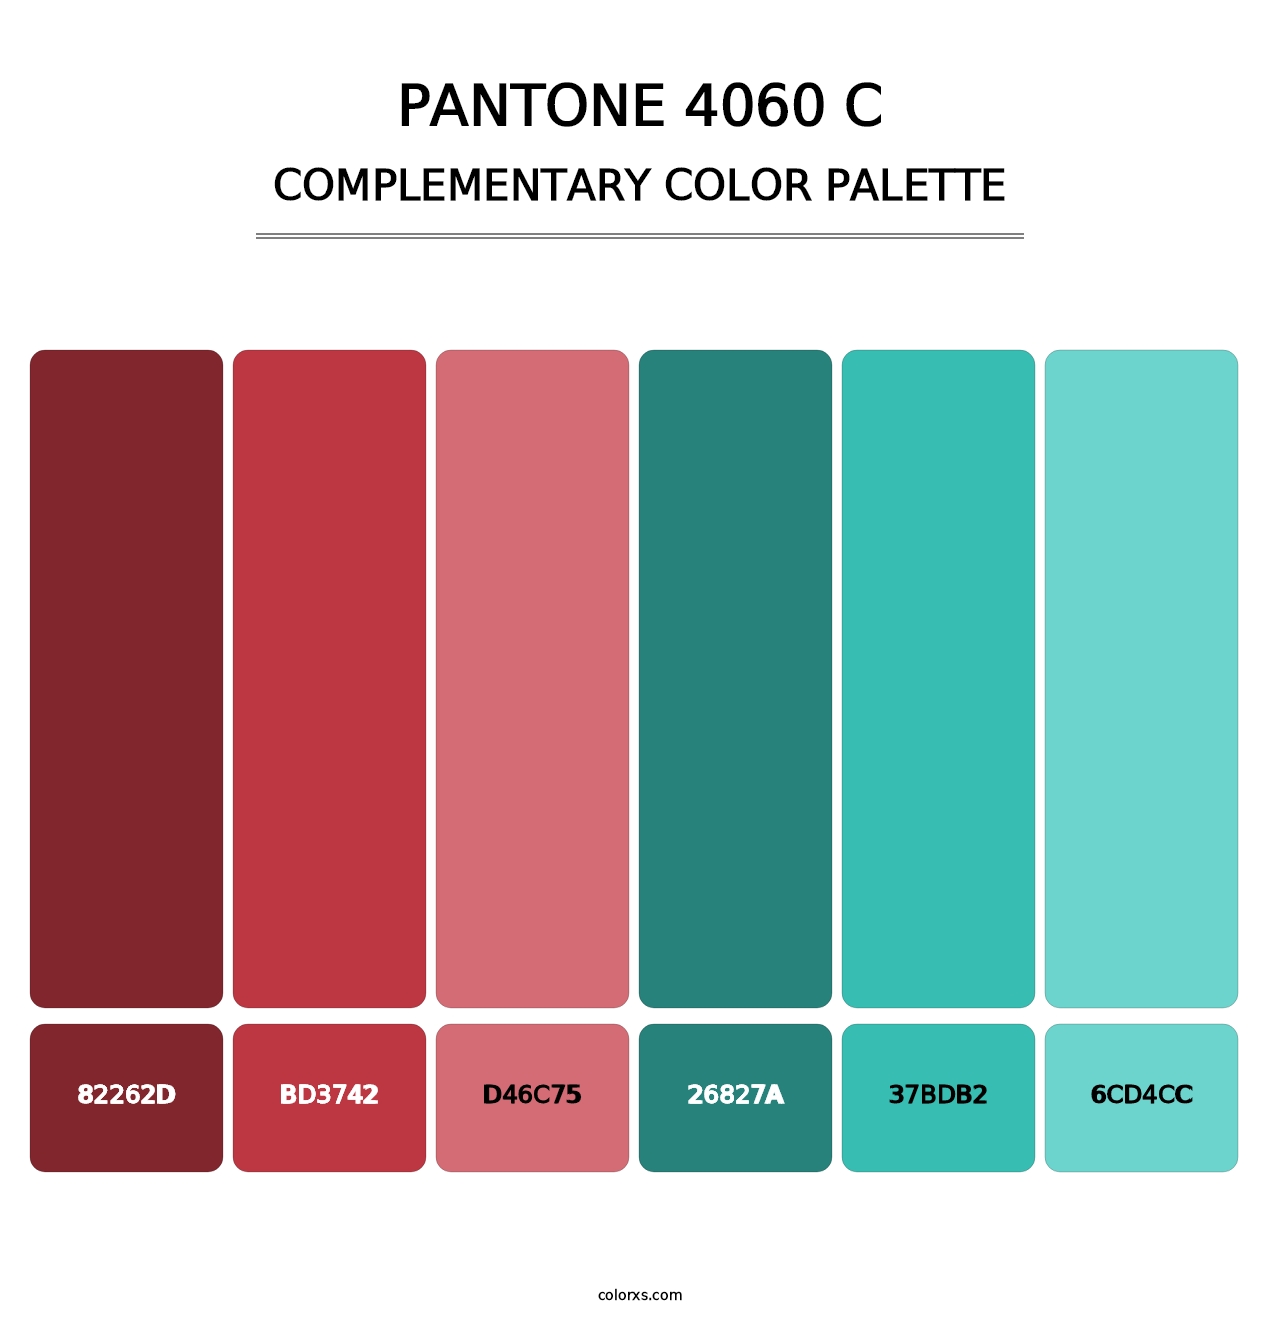 PANTONE 4060 C - Complementary Color Palette